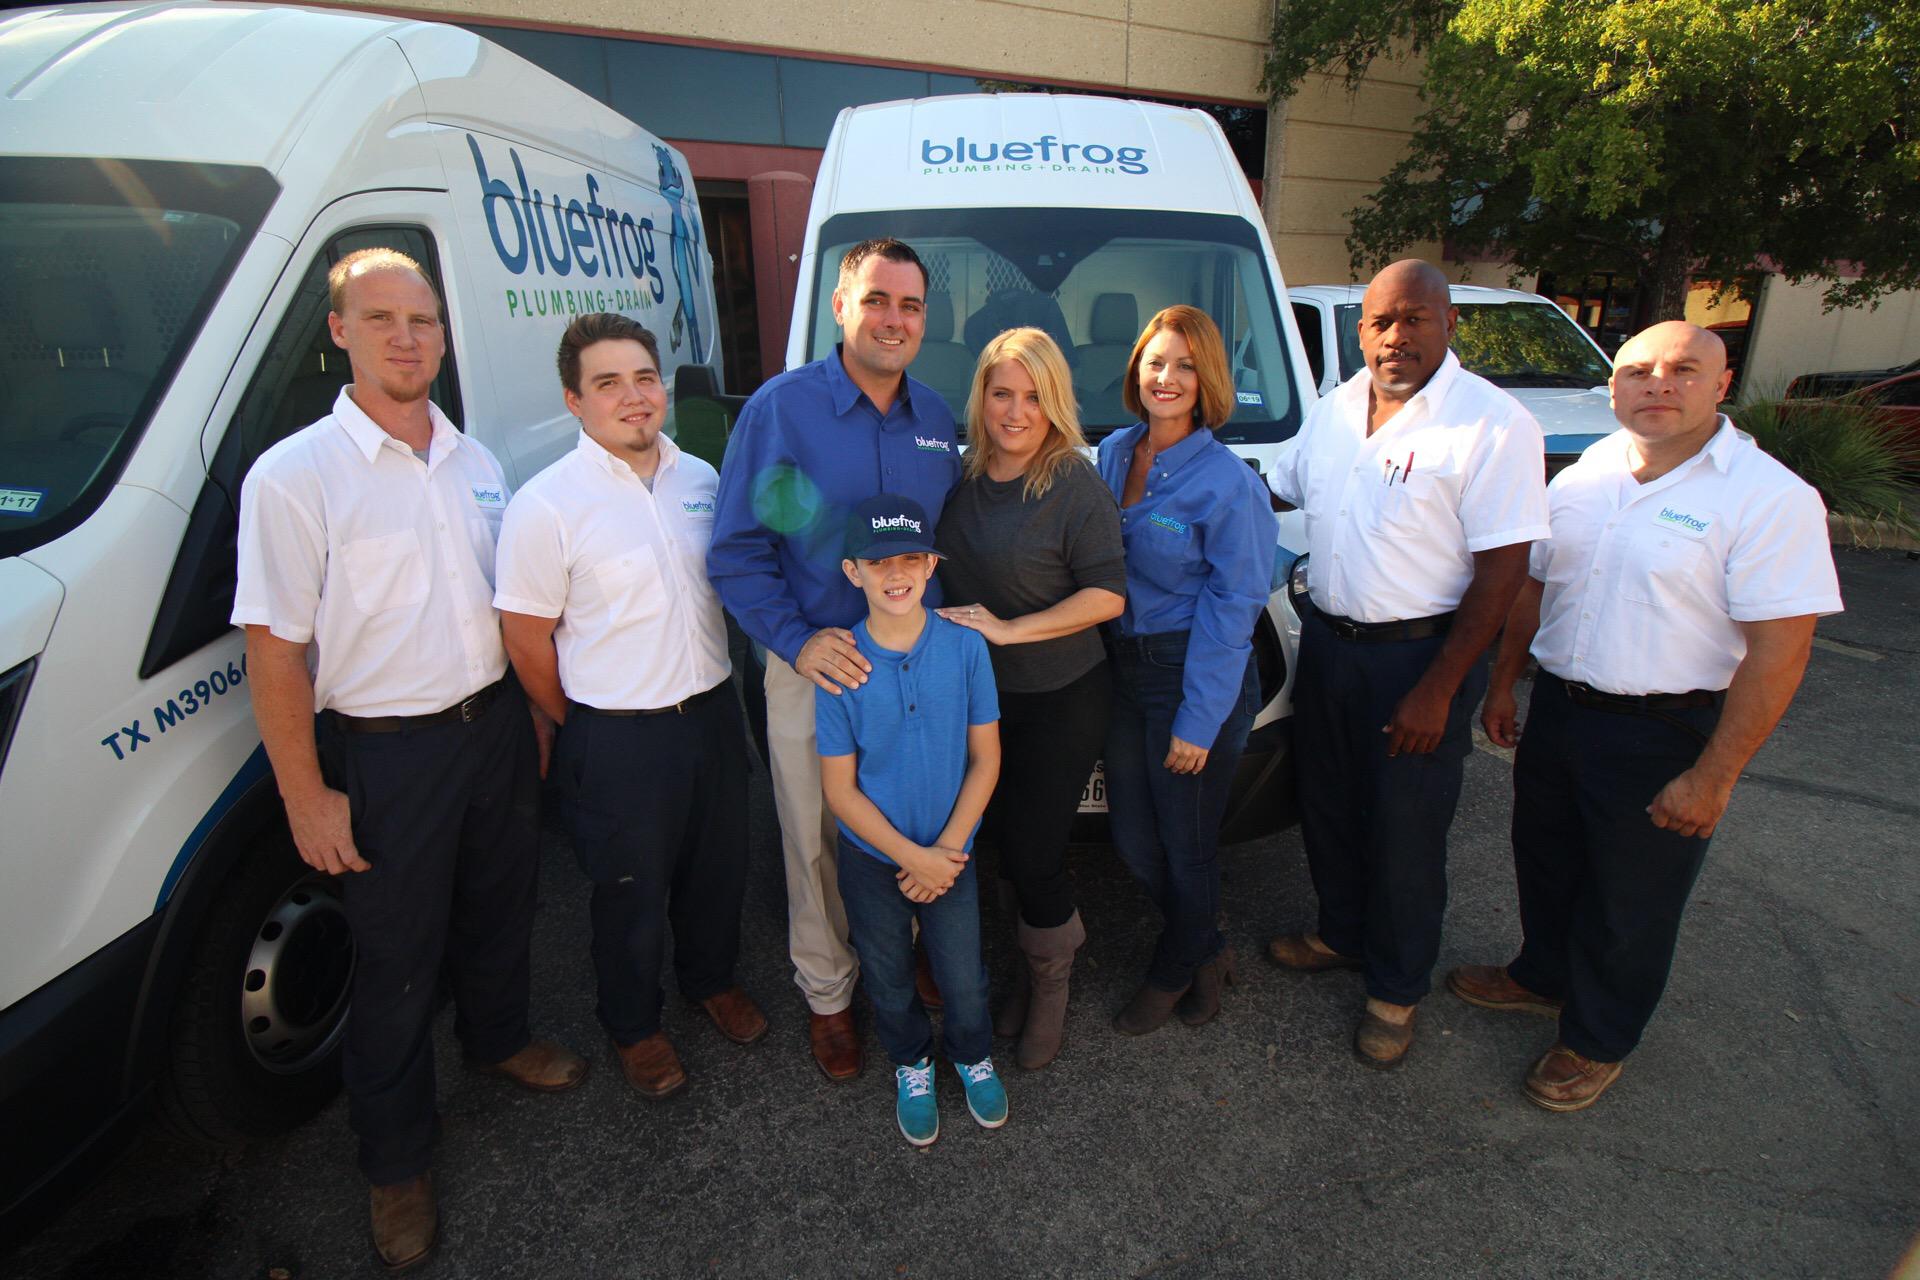 The bluefrog Plumbing + Drain of San Antonio team with their plumbing service trucks.